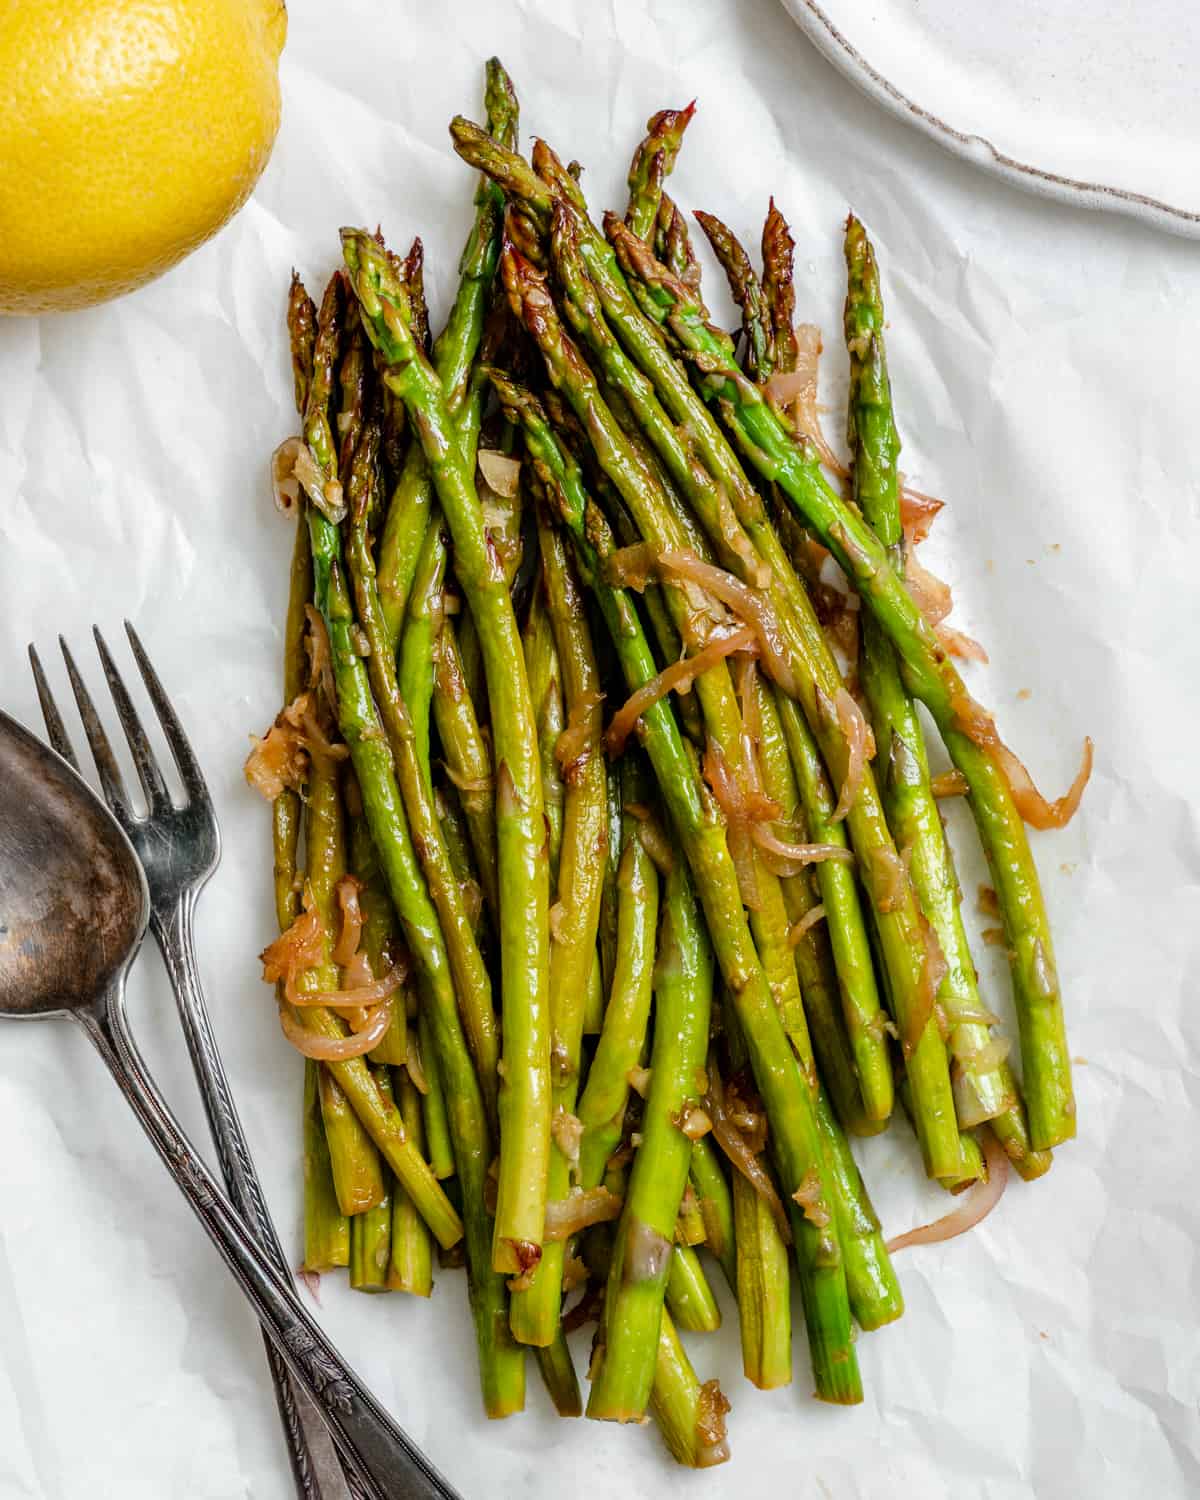 Ready sautéed asparagus with lemon and garlic against a white background 